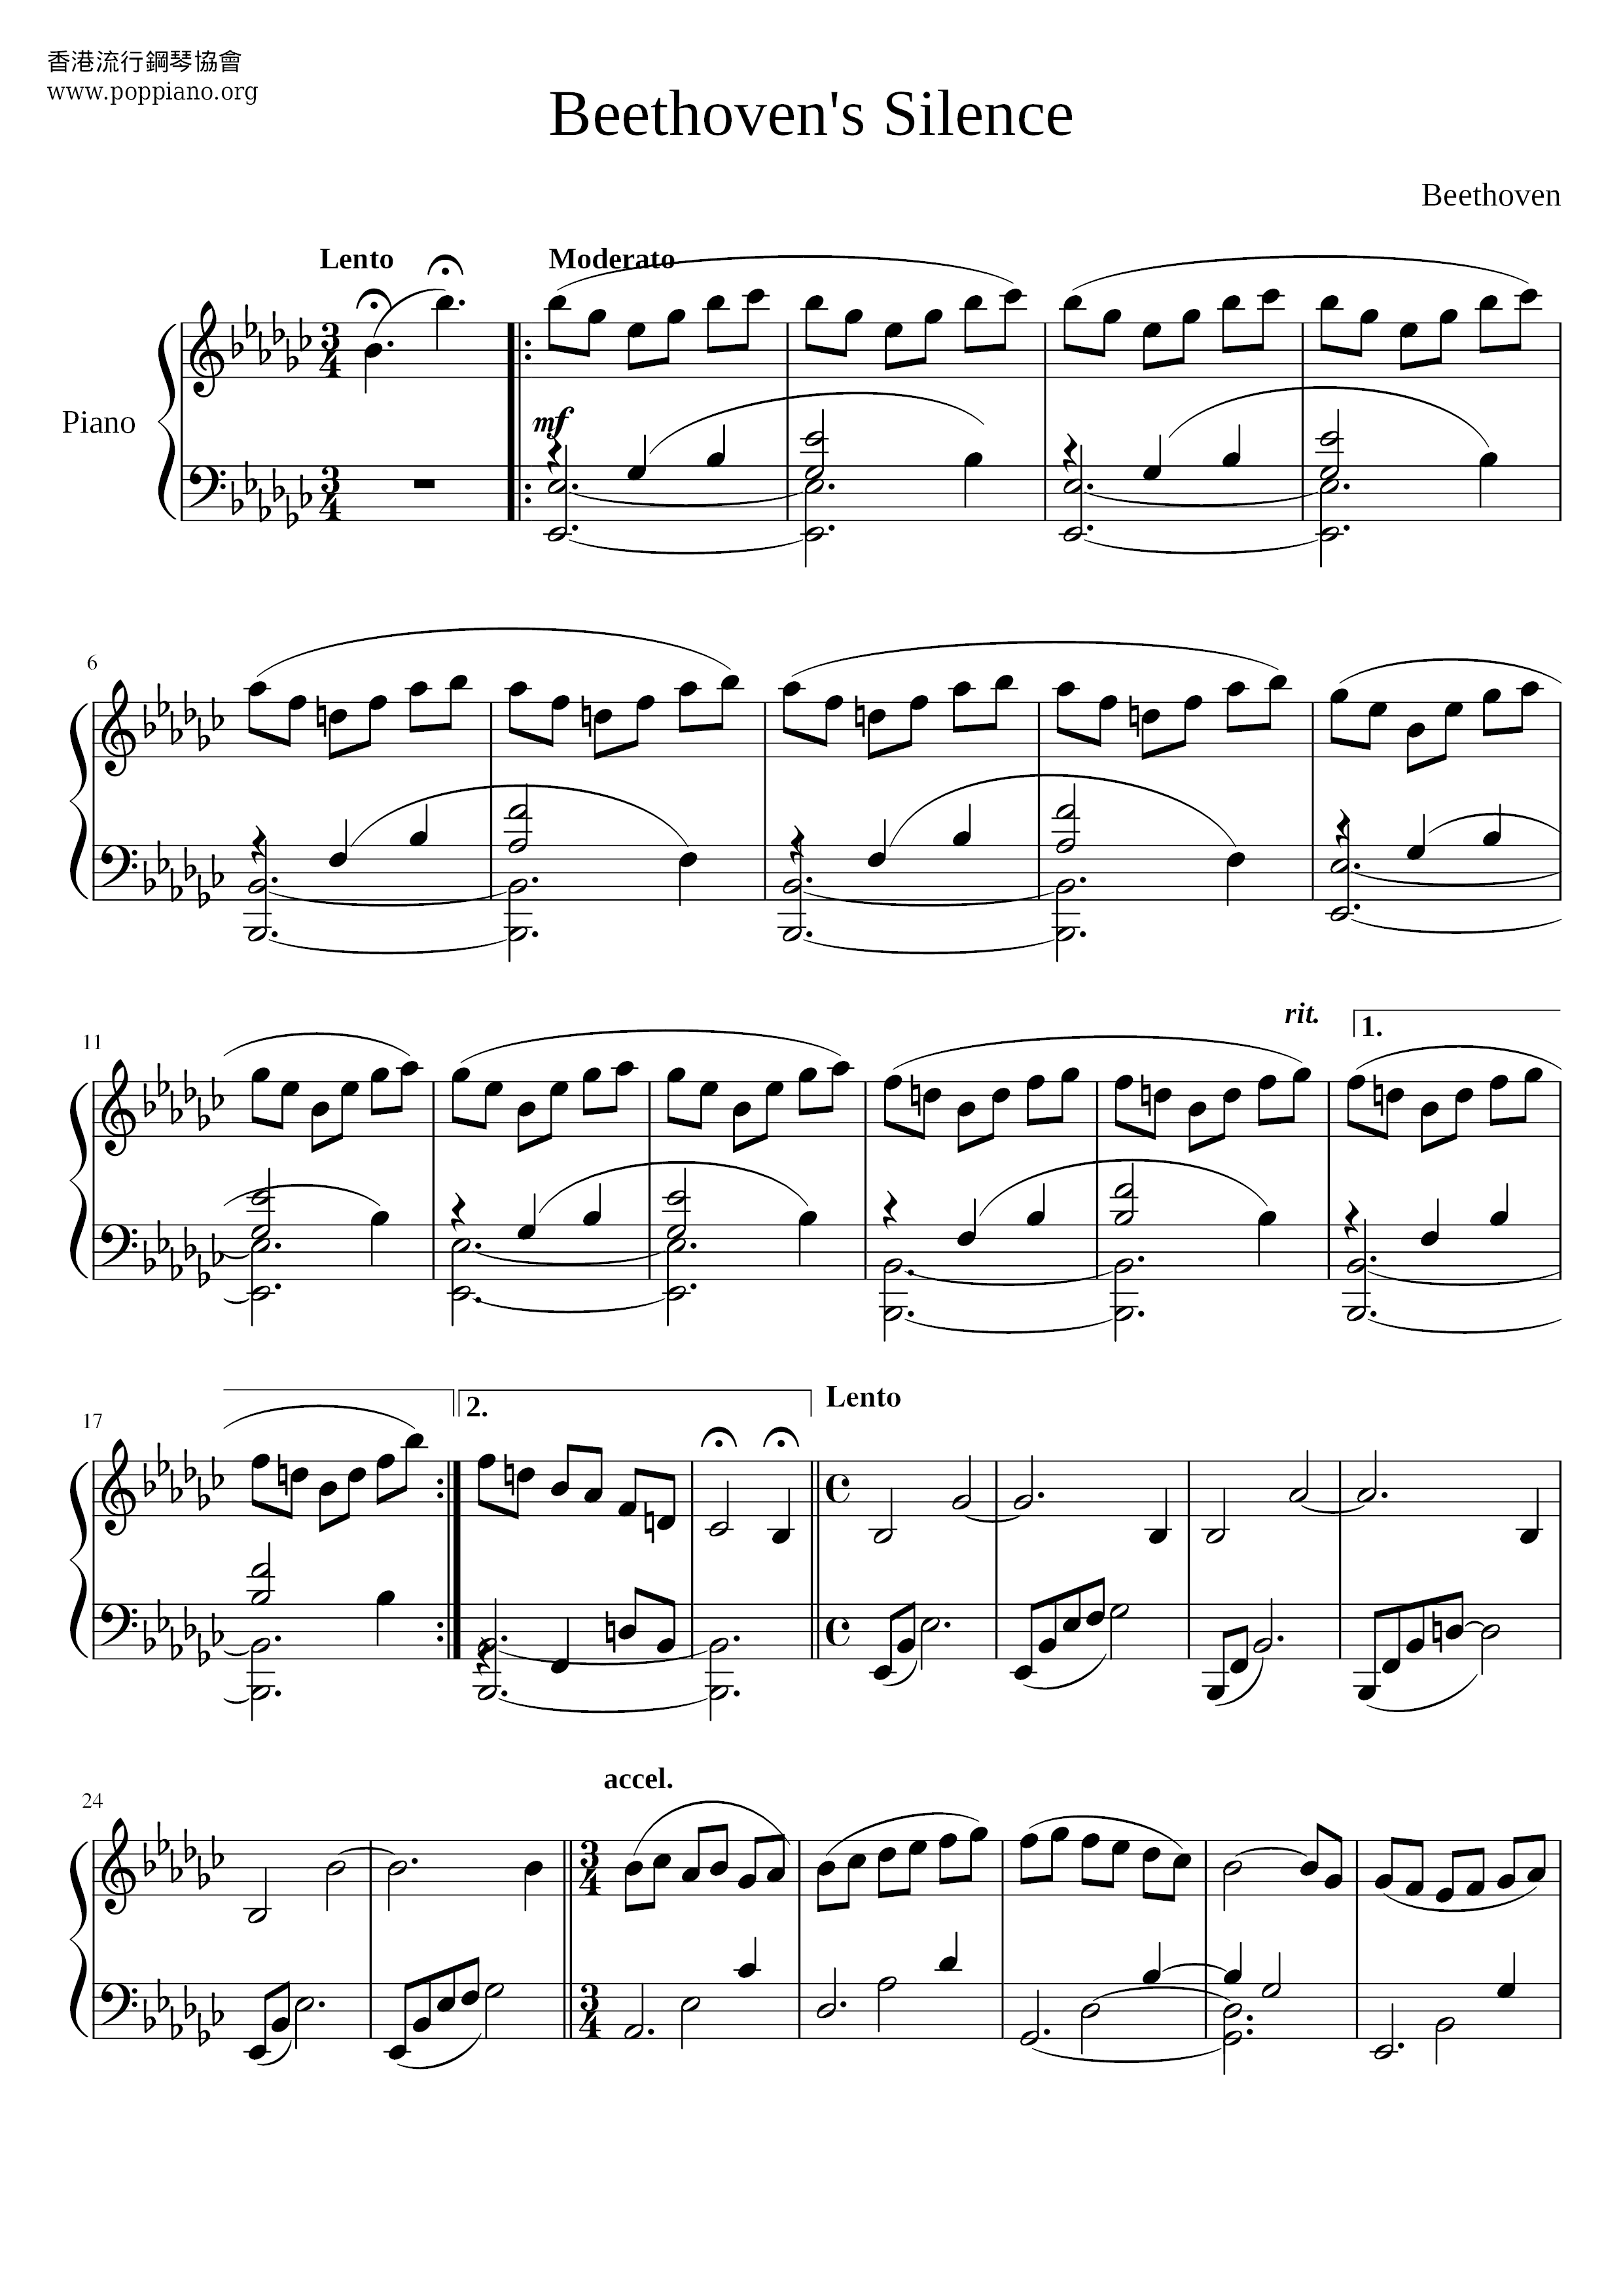 Beethoven's Silence Score